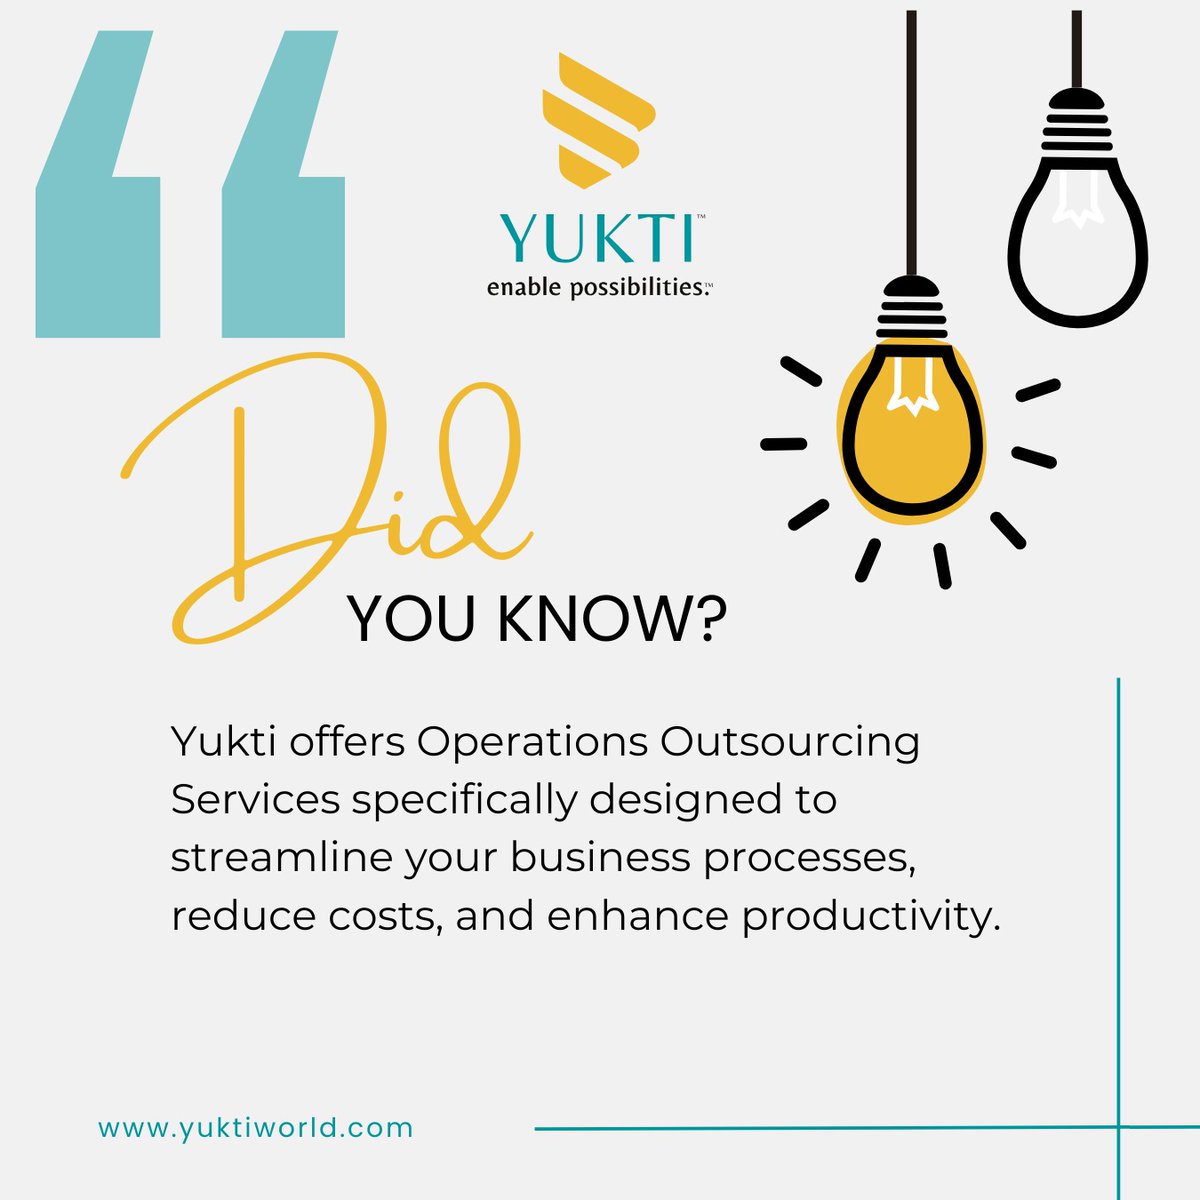 #YuktiGlobalServices #Yuktiworld #Yukti

#GlobalCapabilityCenters #GCCs #GCCServices #GCCServiceprovider #GCCSuccess

#DeliveringResults #Vision #StrategicAlignment #EffectiveIntegration #Teamwork #SharedVision #Operations #OperationalExcellence #GCCOperations 

#GCCsinIndia